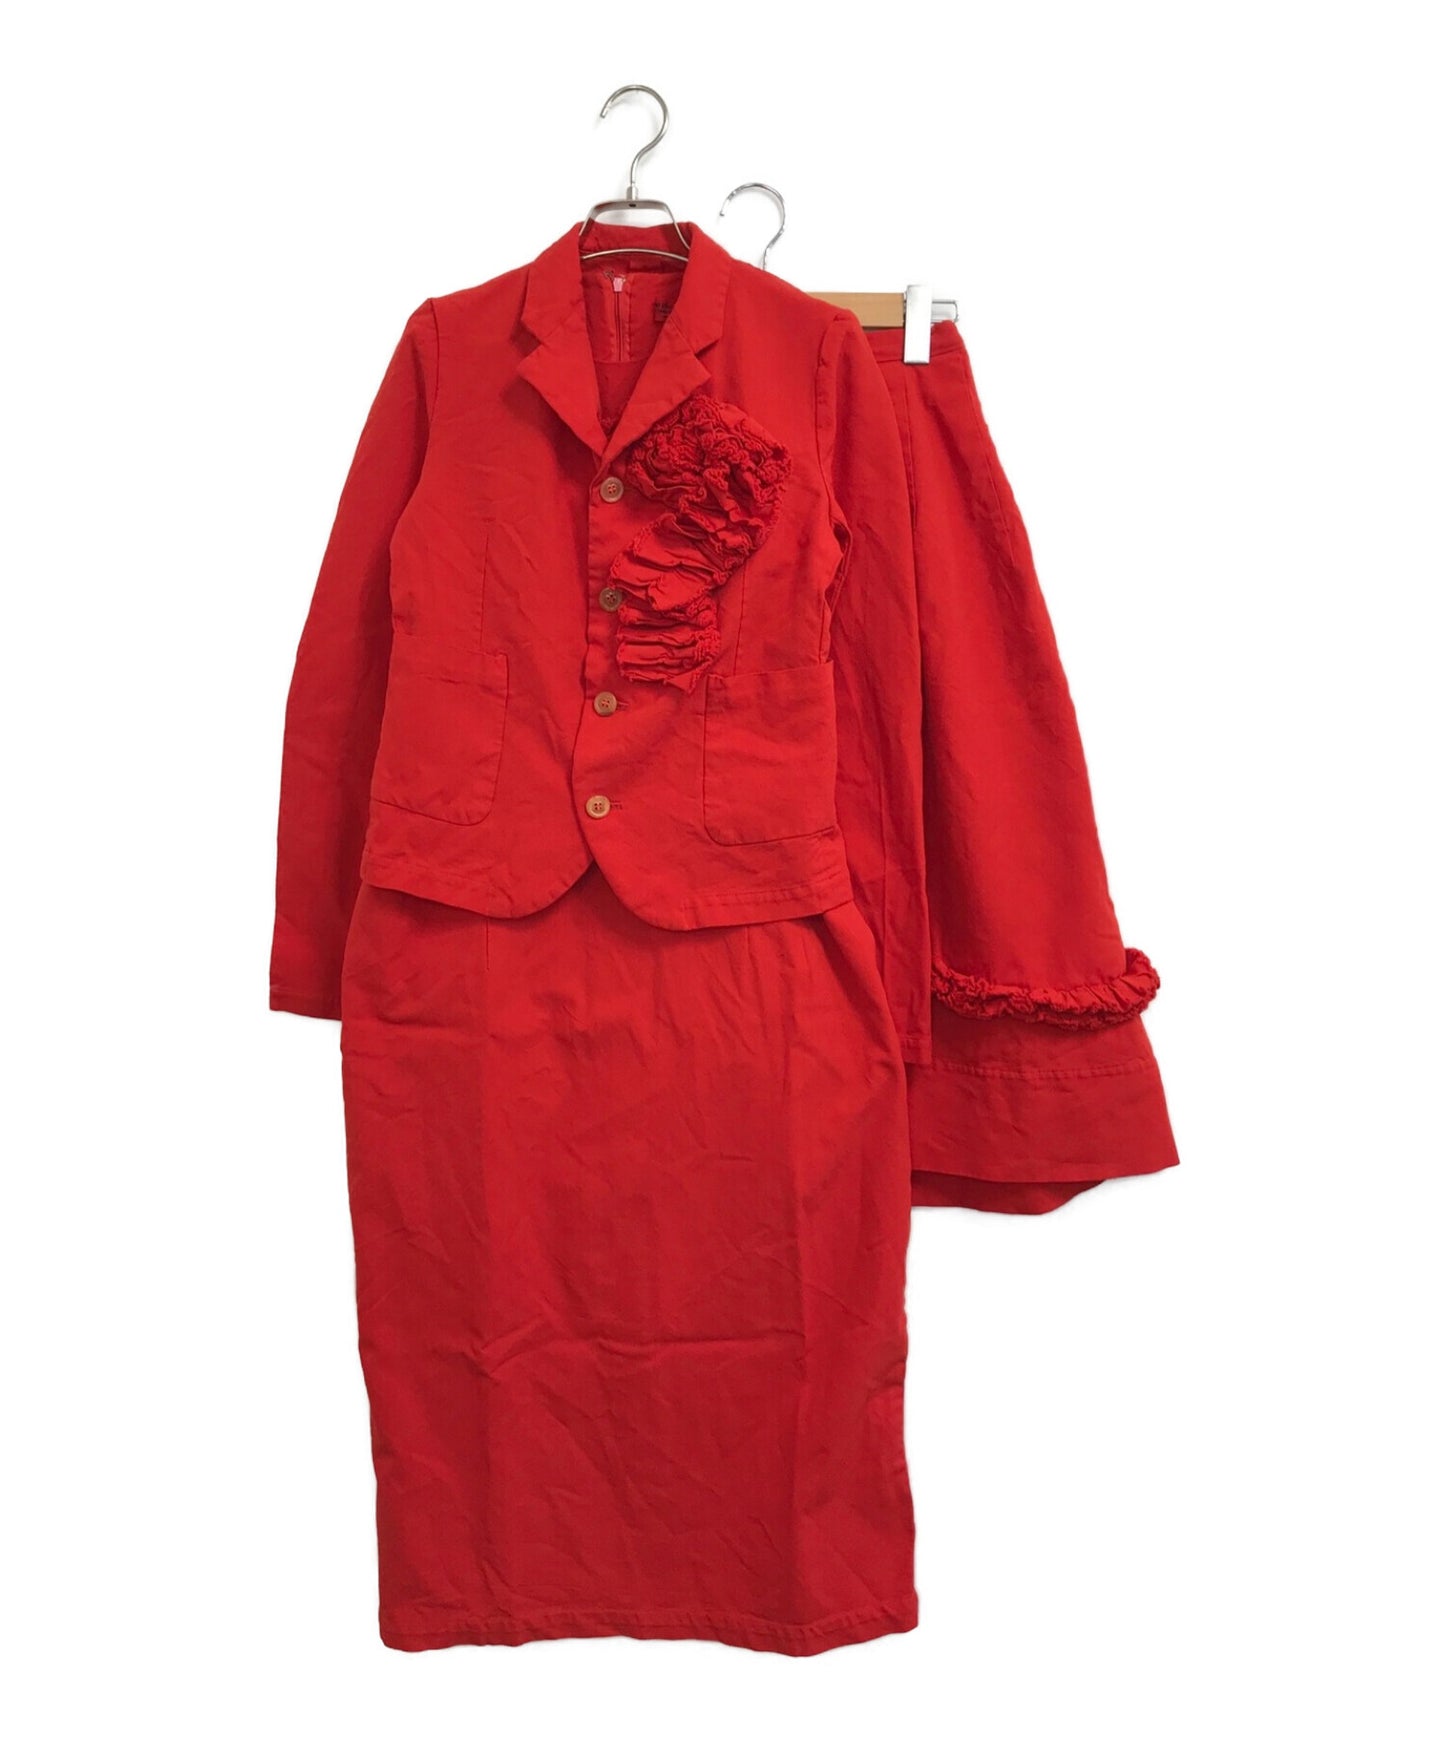 Robe de Chambre Comme des Garcons [เก่า] โพลีเอสเตอร์ย้อมผลิตภัณฑ์ 3 ชิ้น RJ-100390